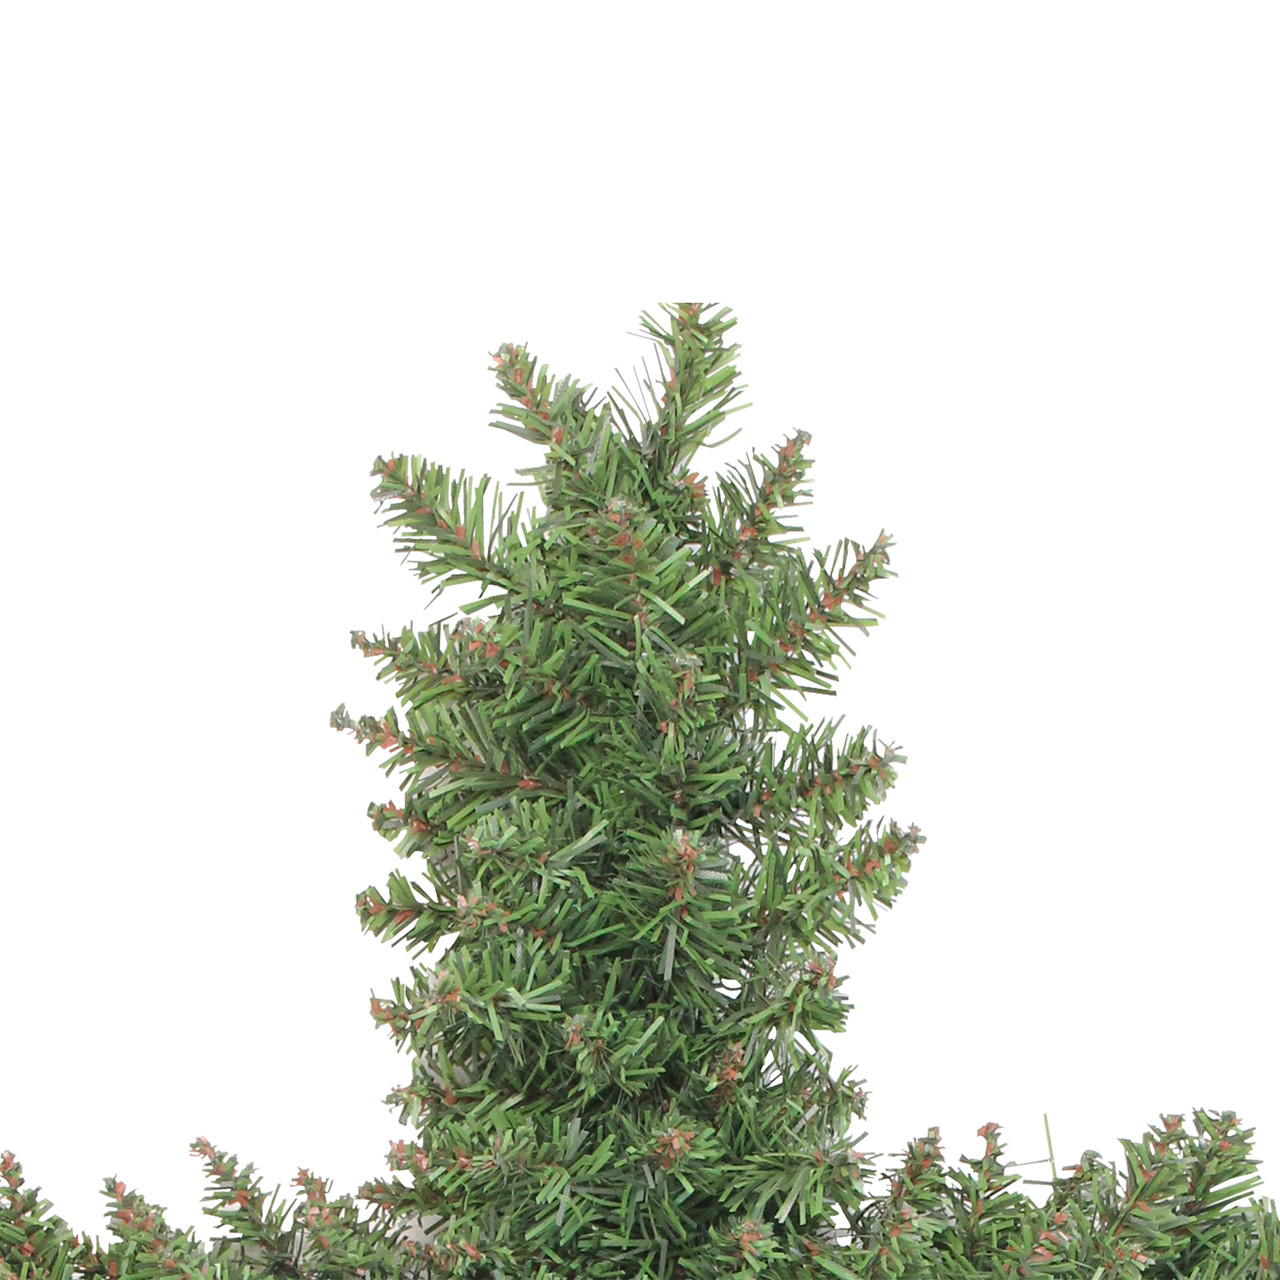 Northlight 25 in. Green Unlit Artificial Pine Heart Shaped Wreath